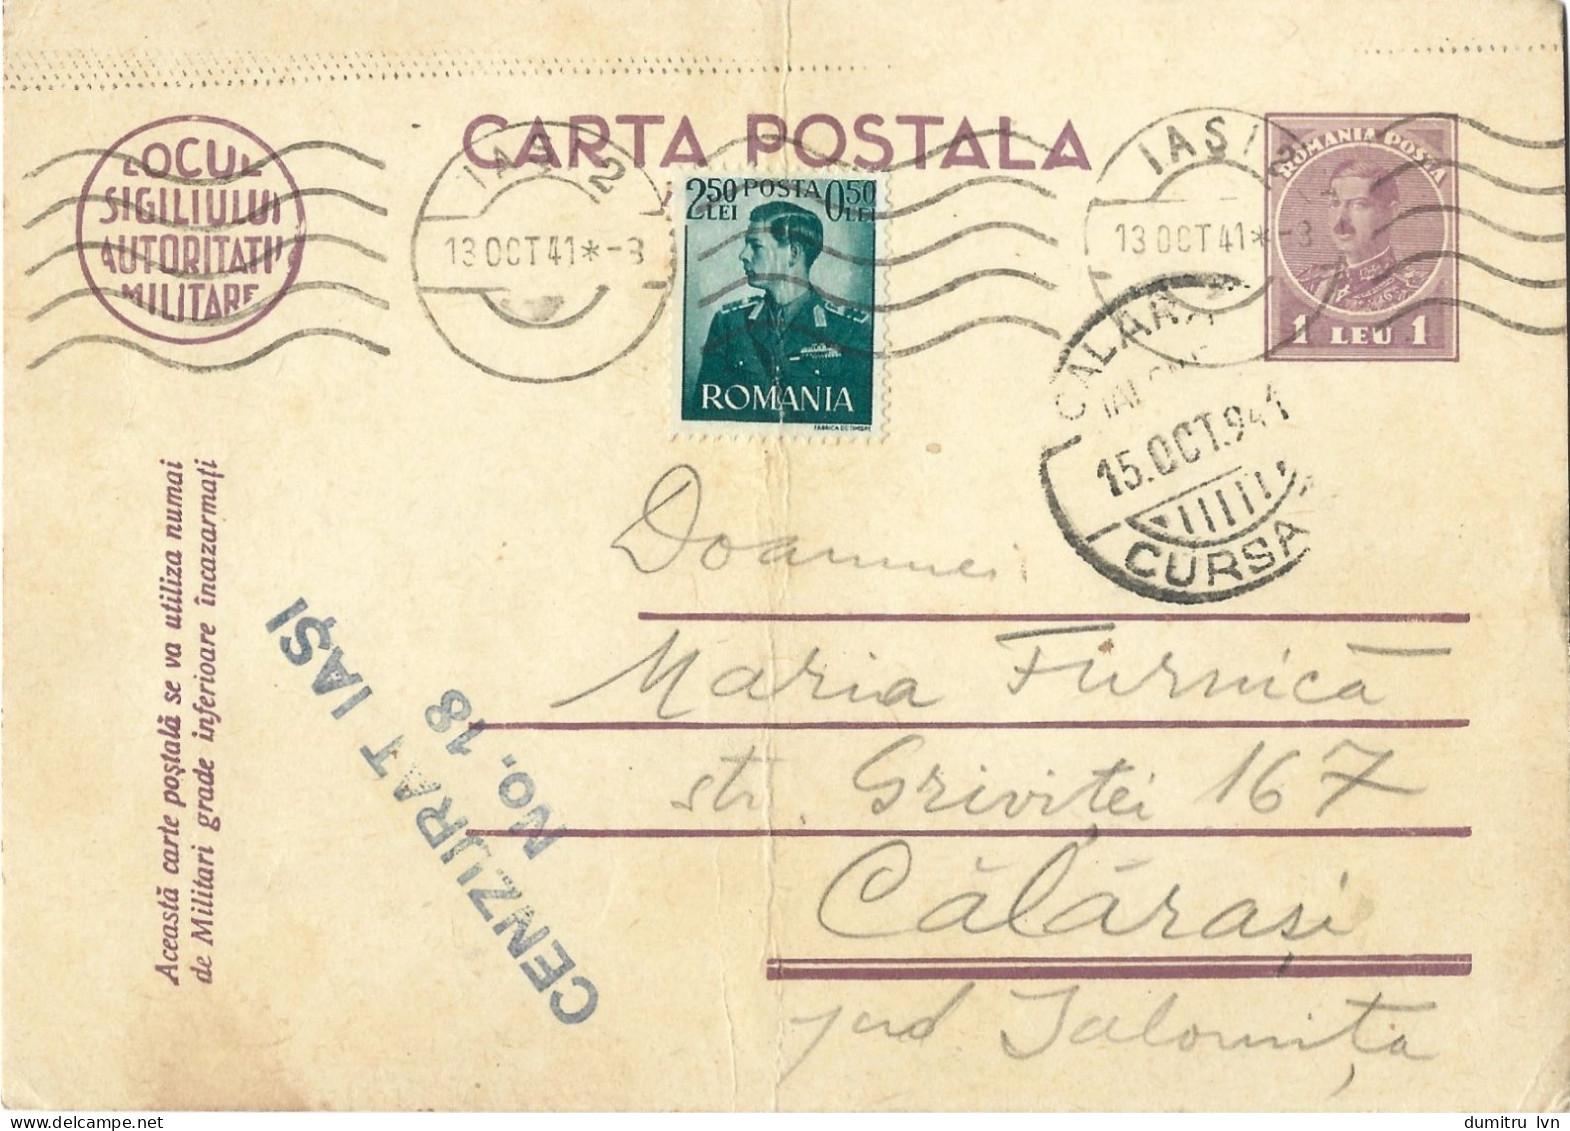 ROMANIA 1941 MILITARY POSTCARD, CESORED IASI NO.18 POSTCARD STATIONERY - World War 2 Letters